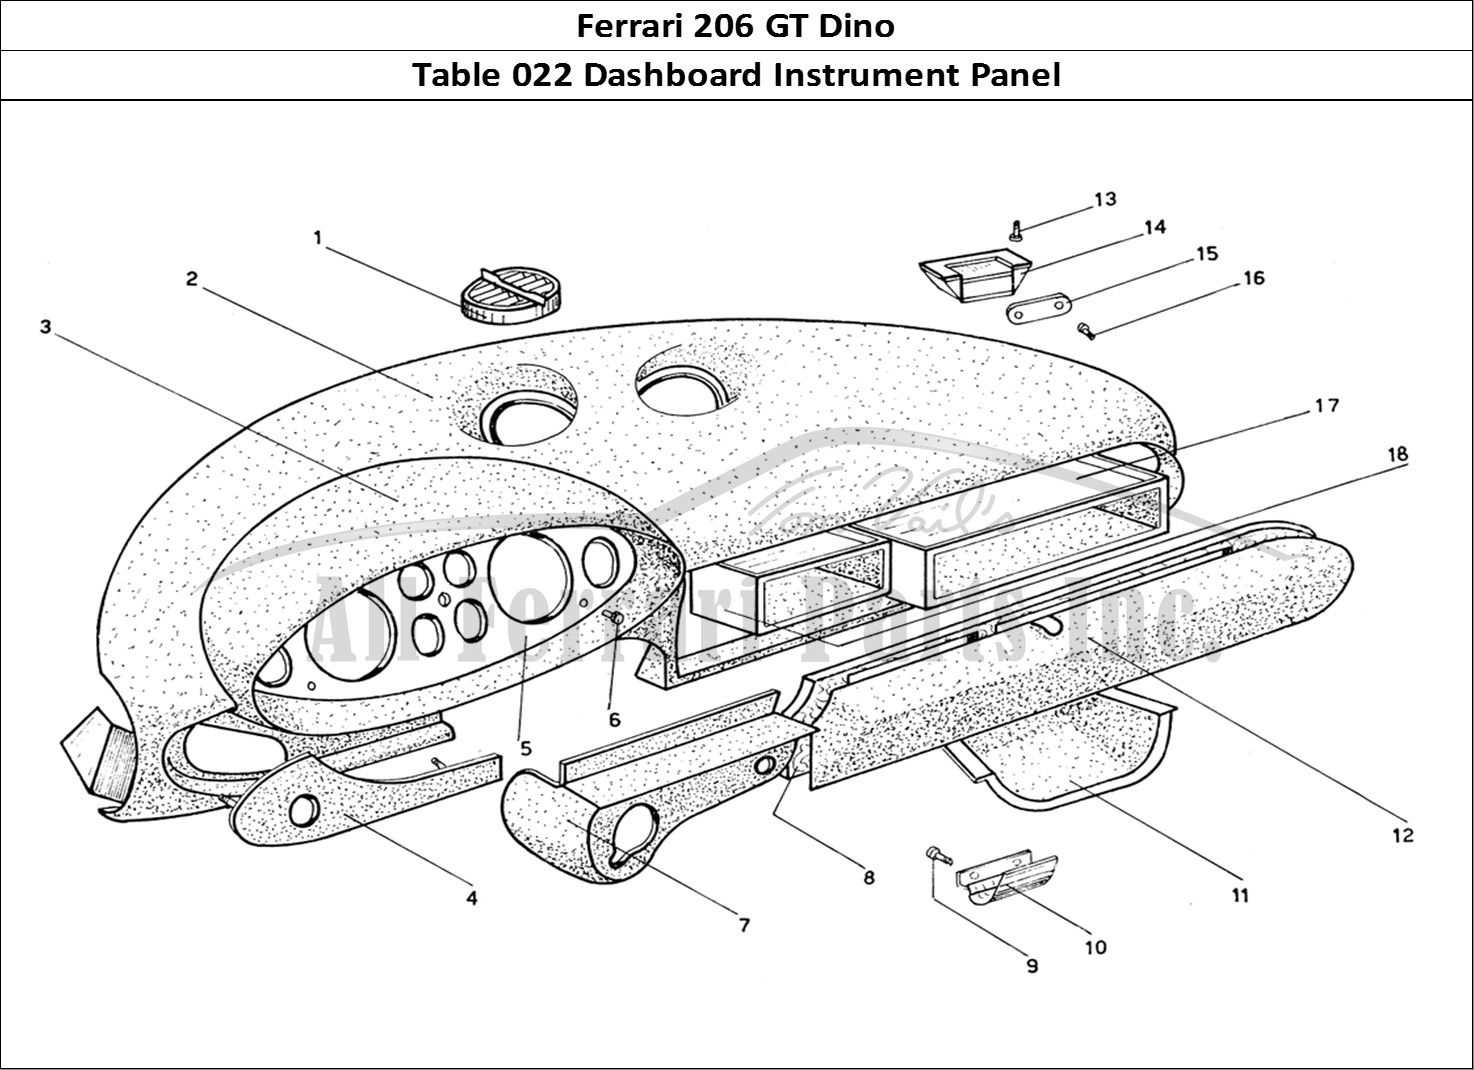 Ferrari Parts Ferrari 206 GT Dino (Coachwork) Page 022 Dashboard